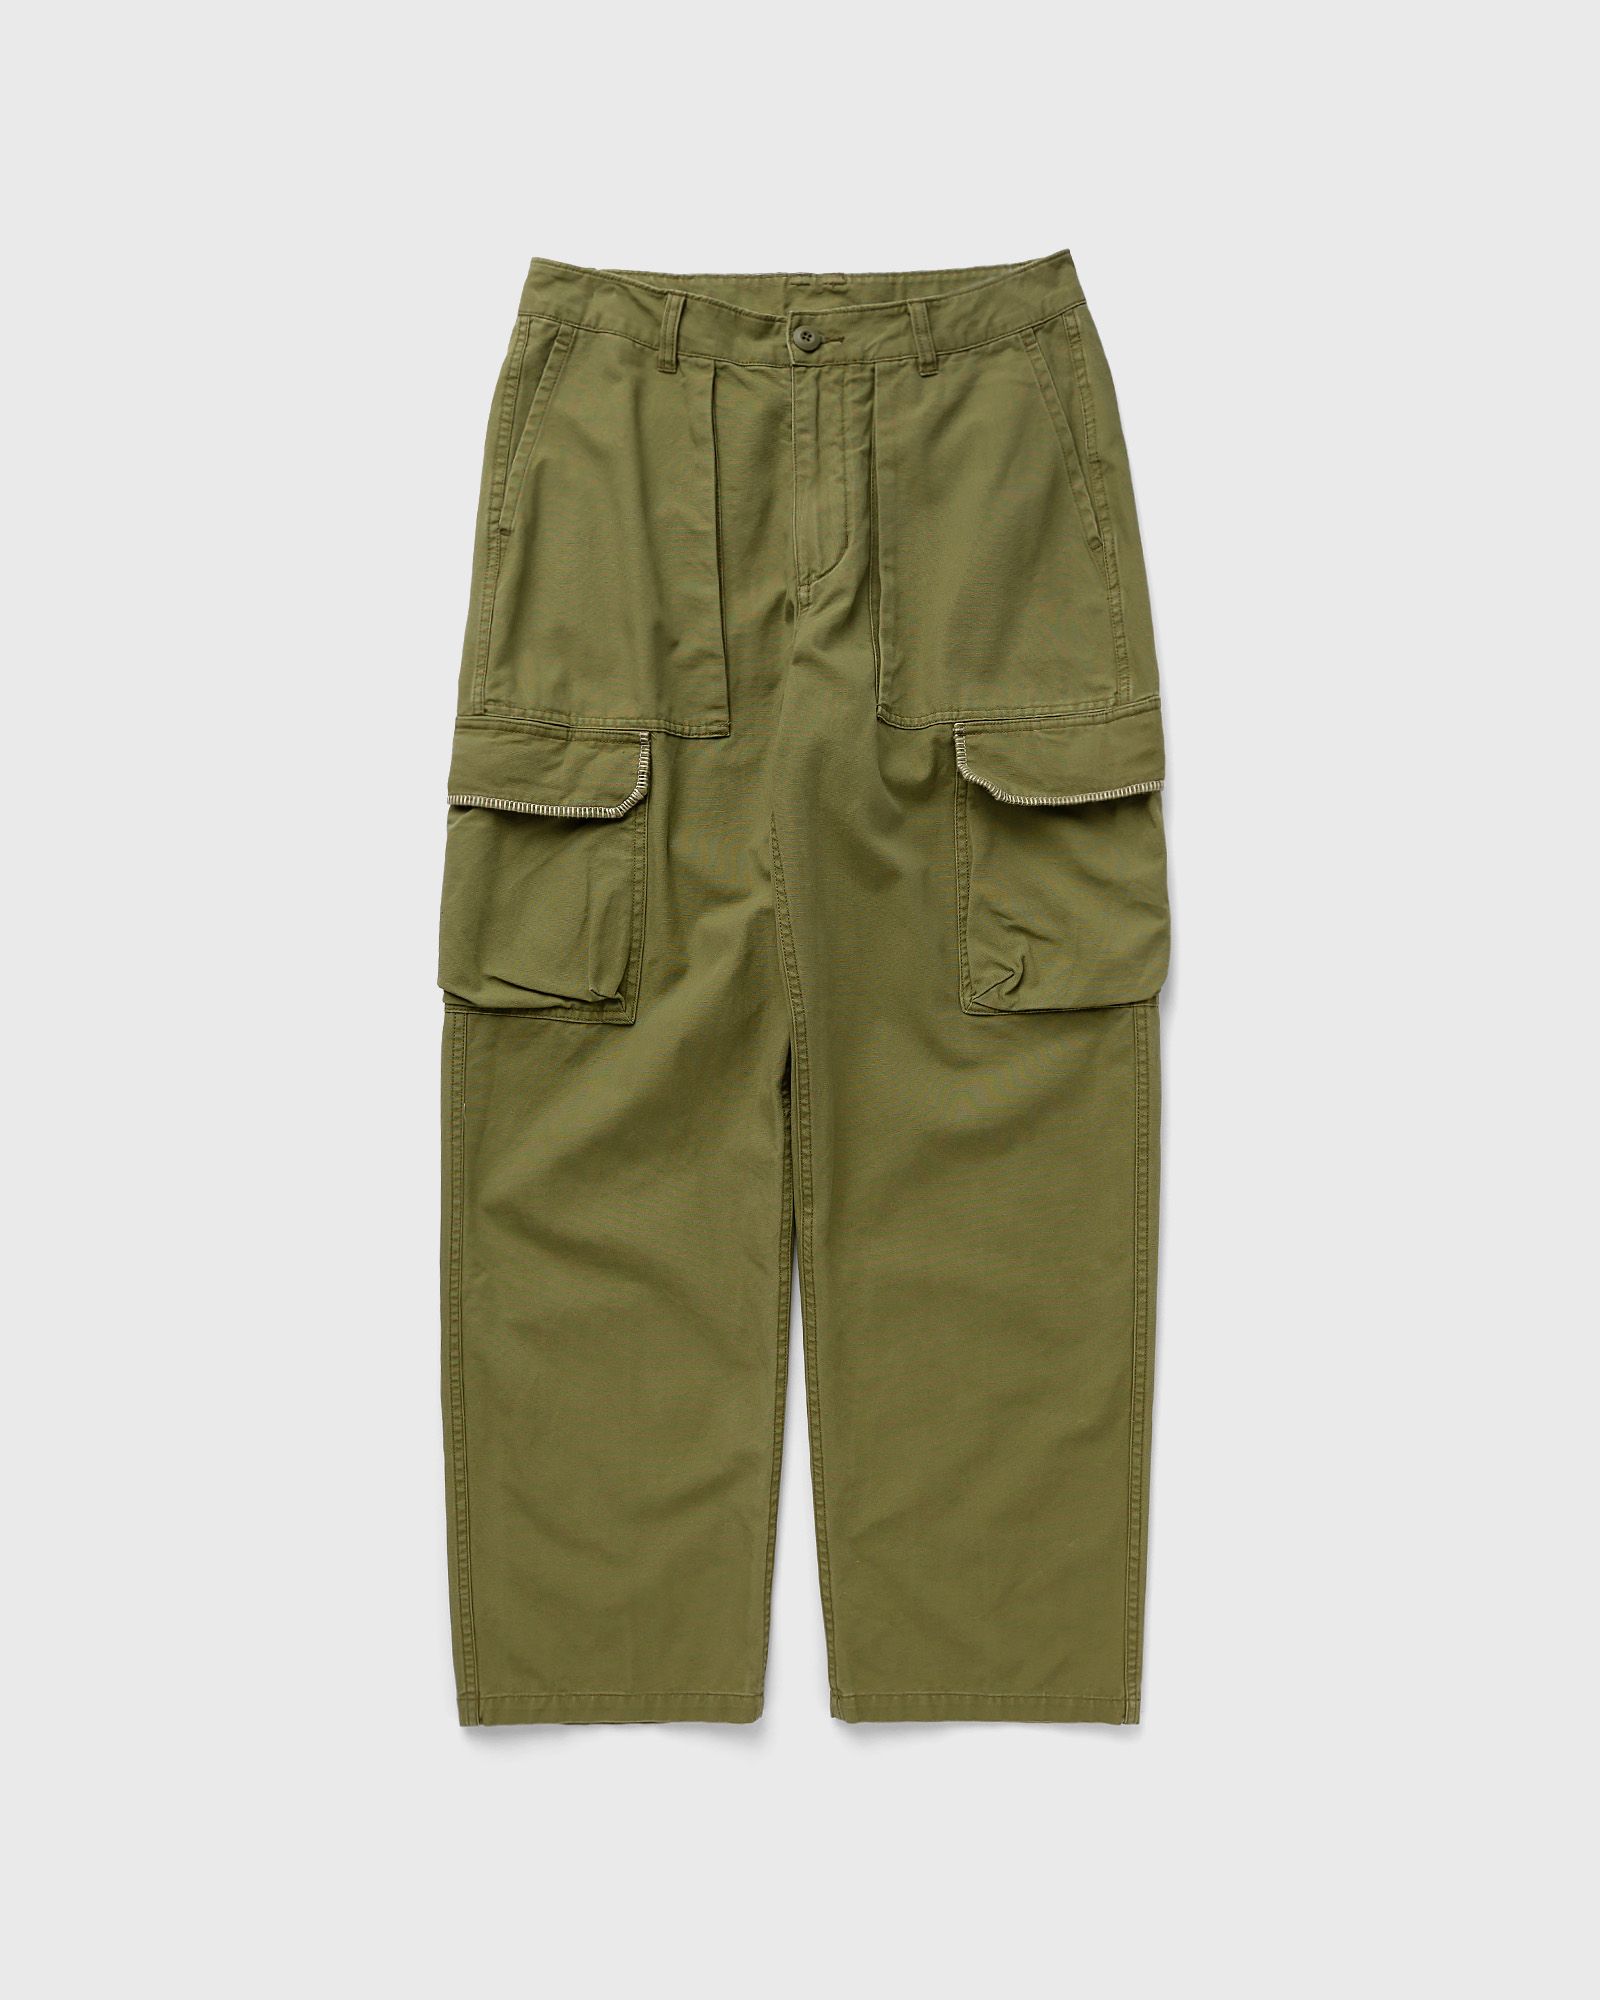 Jordan - x union x bephies beauty supply cargo pant men cargo pants green in größe:xxl